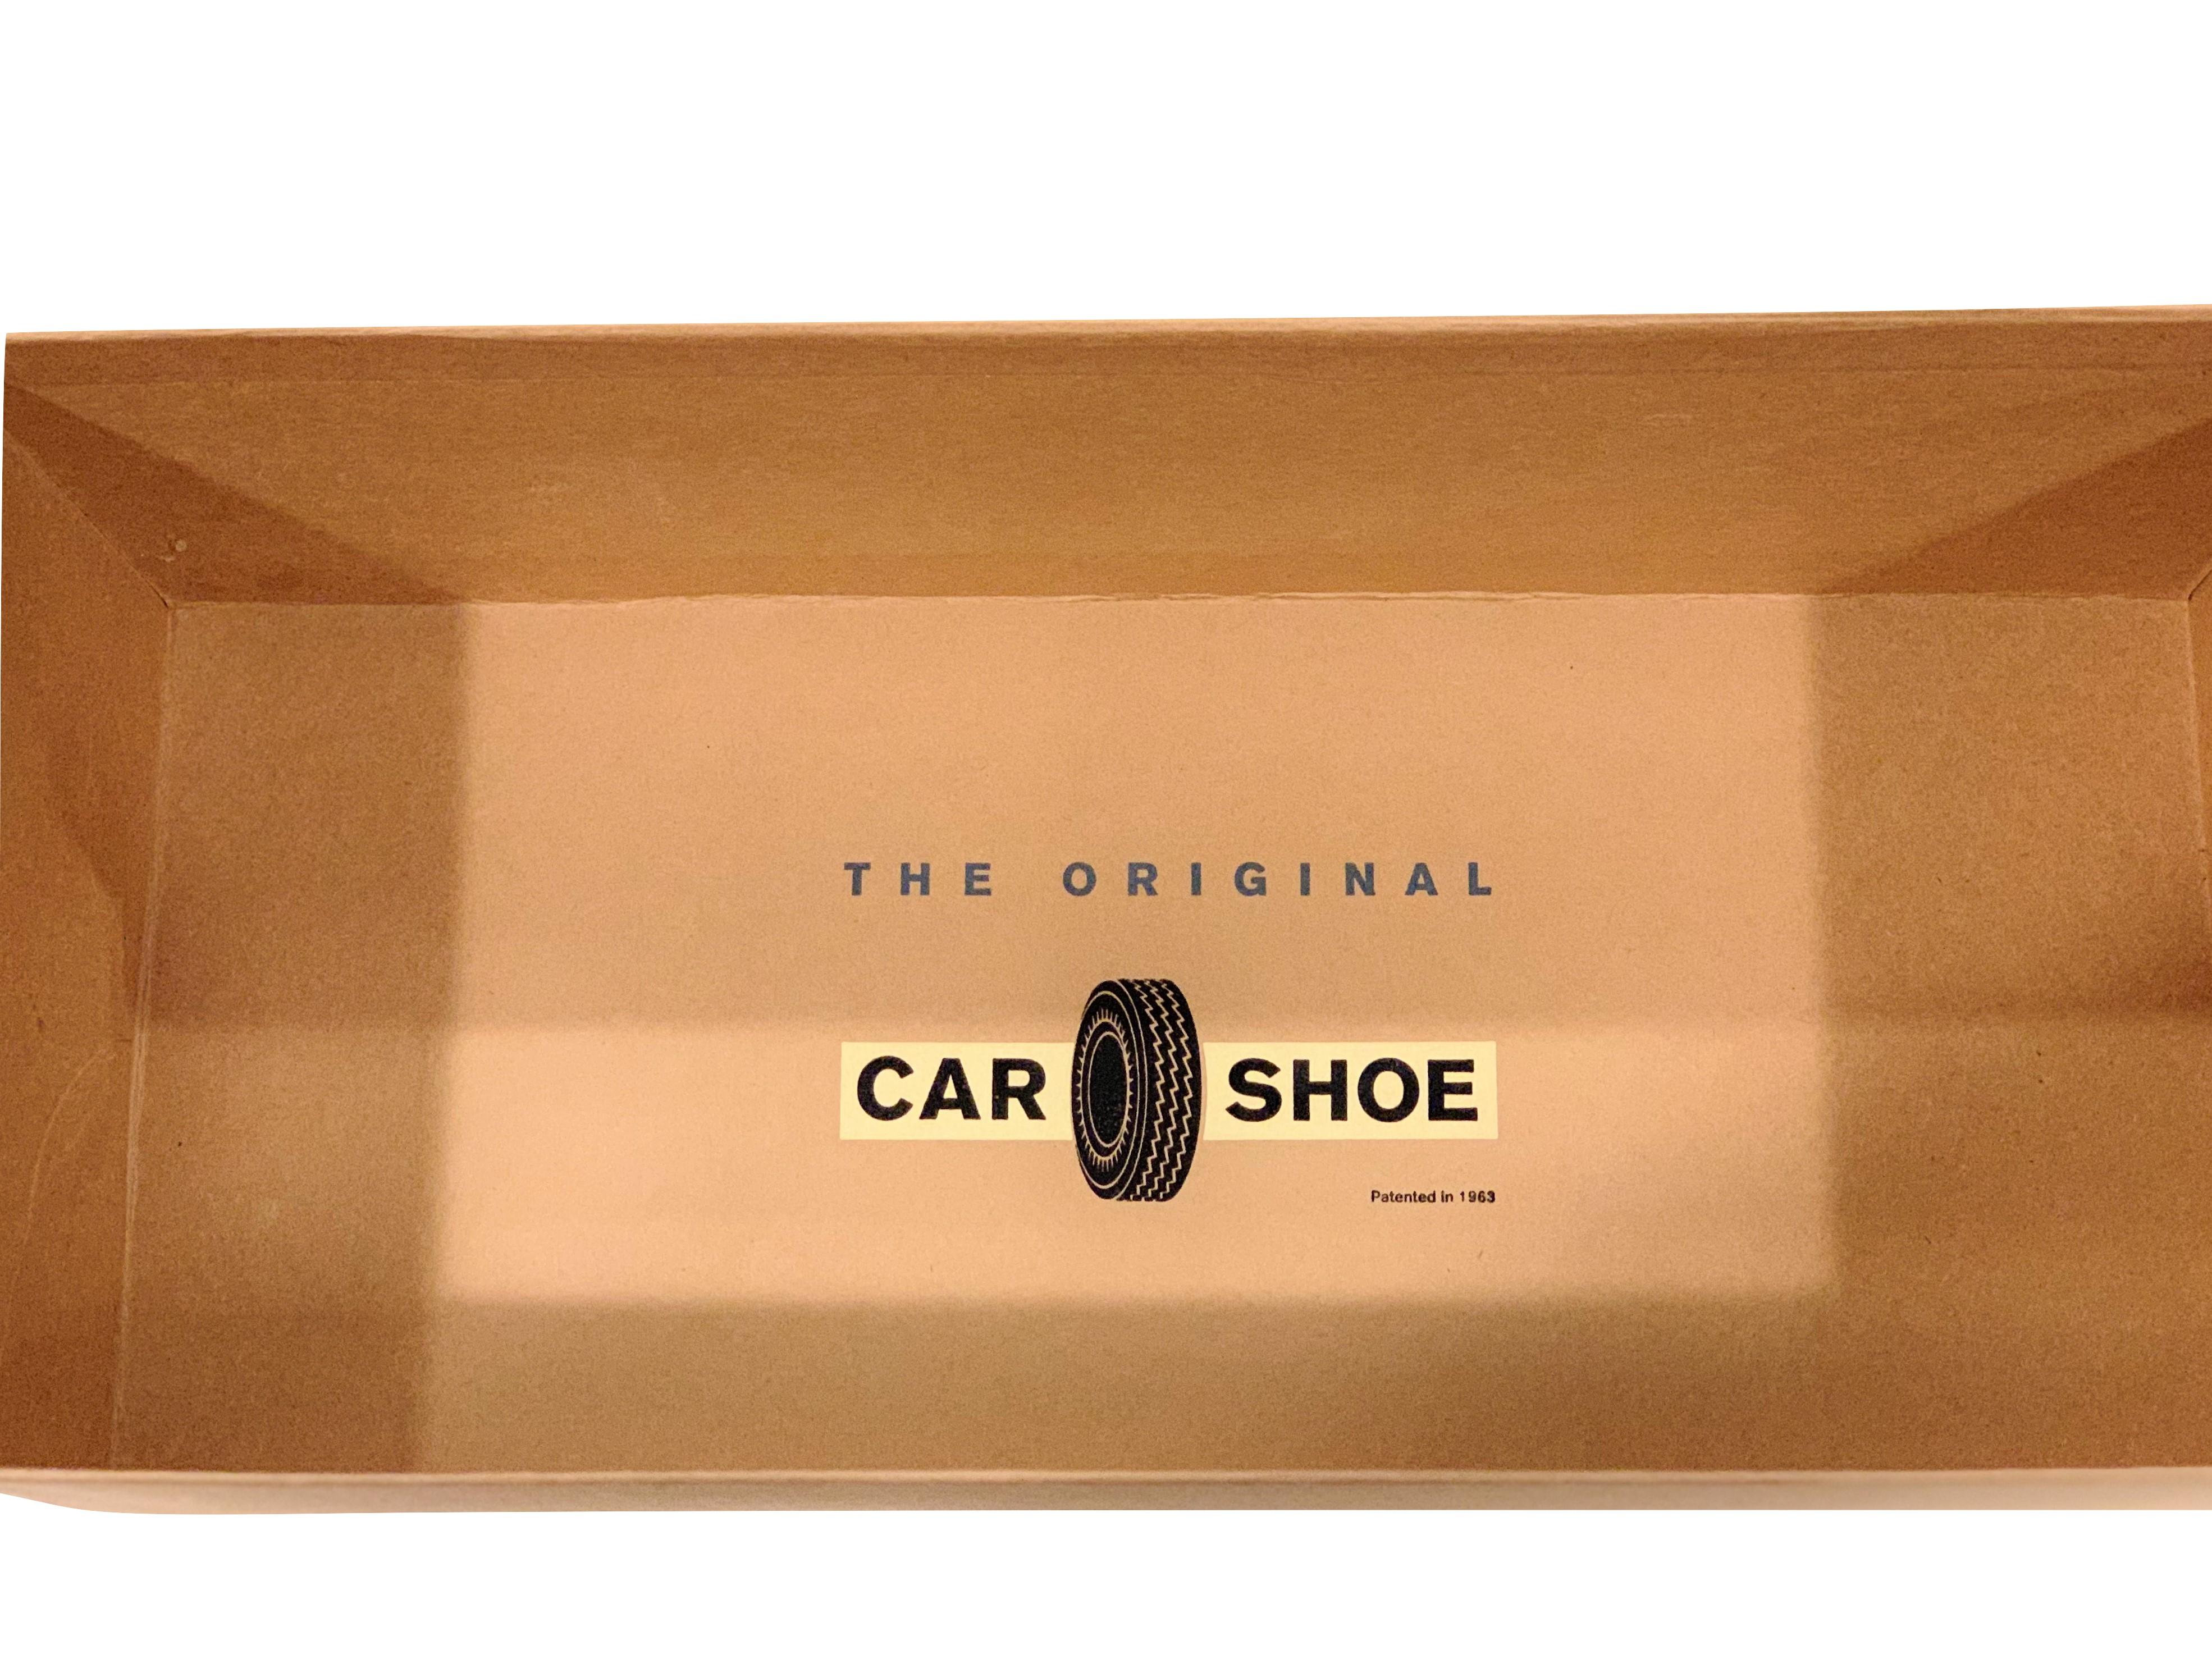  New The Original Prada Car Shoe Flat Moccasin Shearling House Driving  Sz 36.5 11